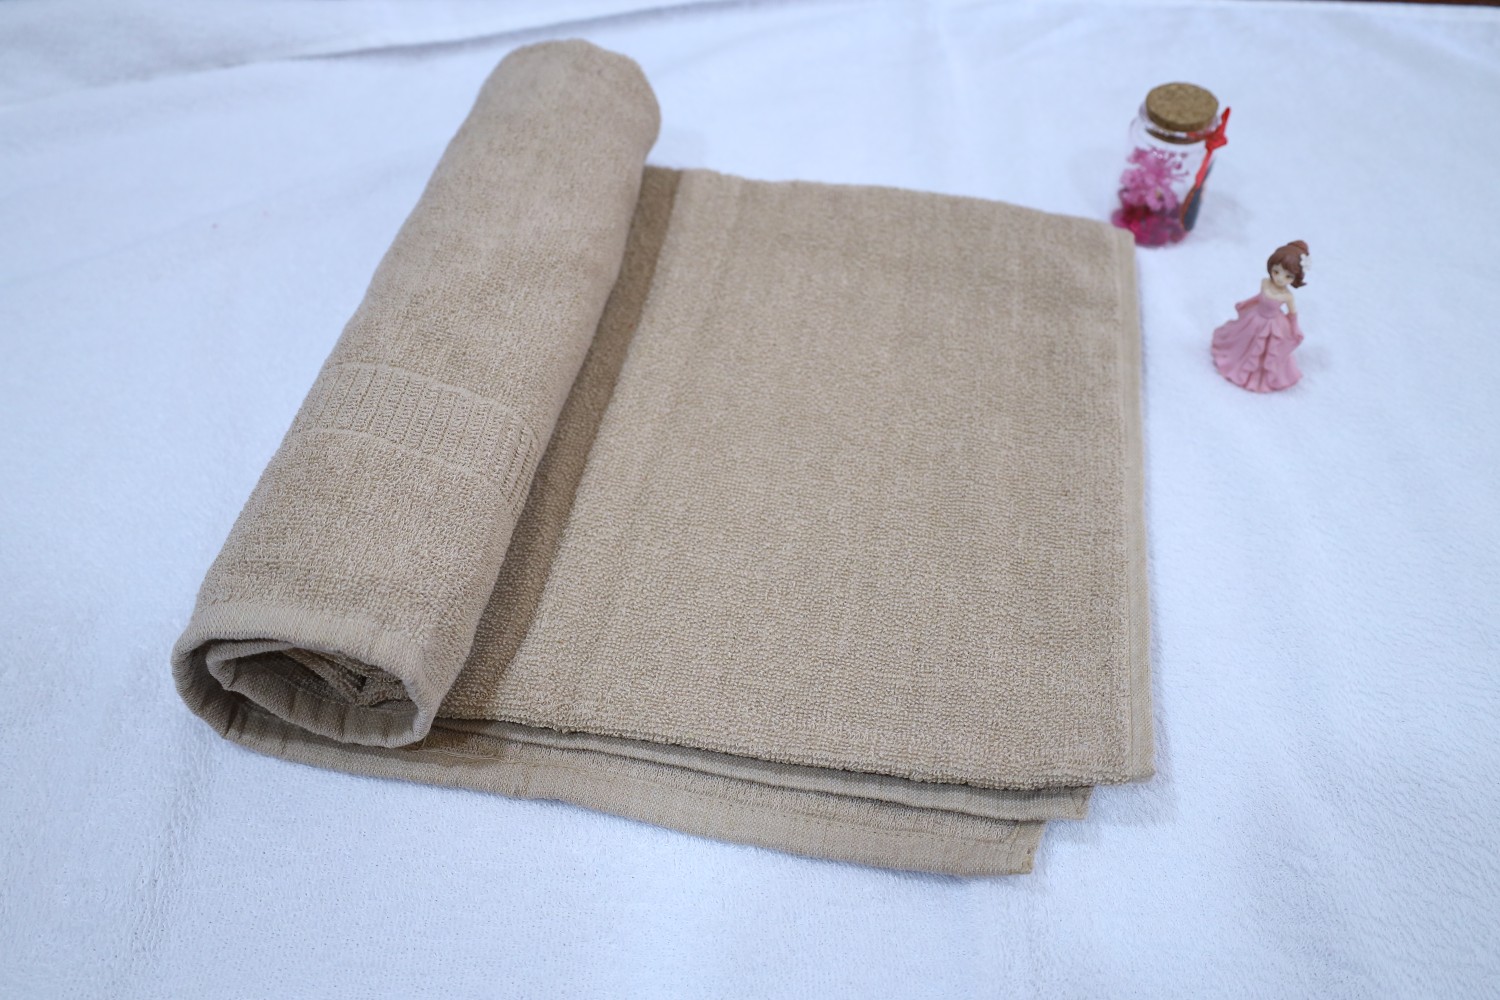 Taurusent Super Soft 100% Cotton High Absorbing Turkey Bath Towel, Size: 30x60 inches (450 GSM) - Pack of 1(Beige)